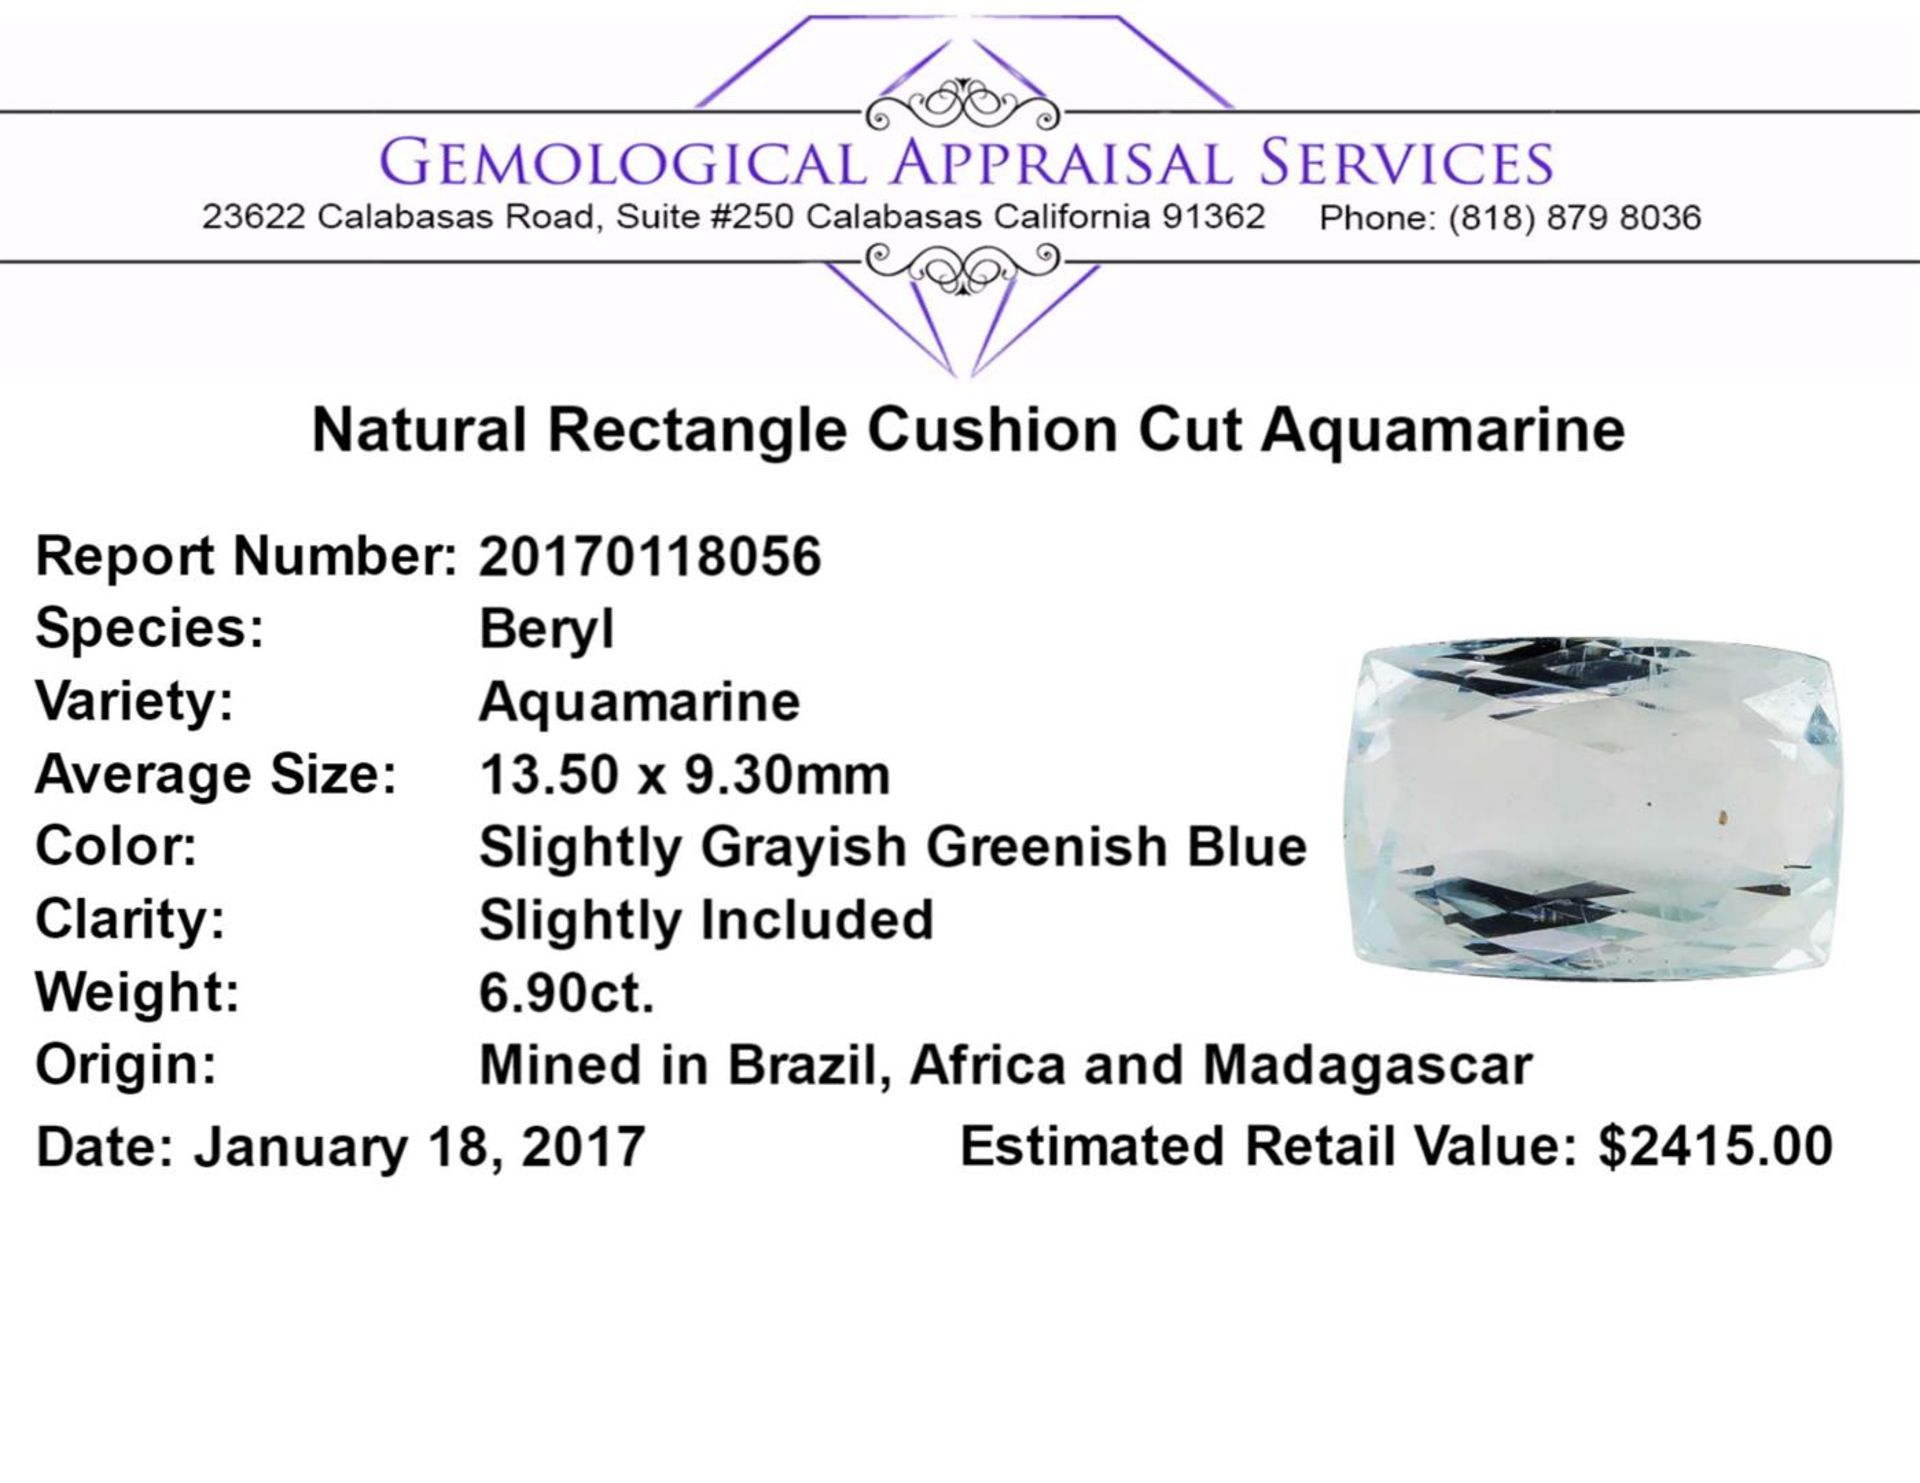 6.90 ct.Natural Rectangle Cushion Cut Aquamarine - Image 2 of 2